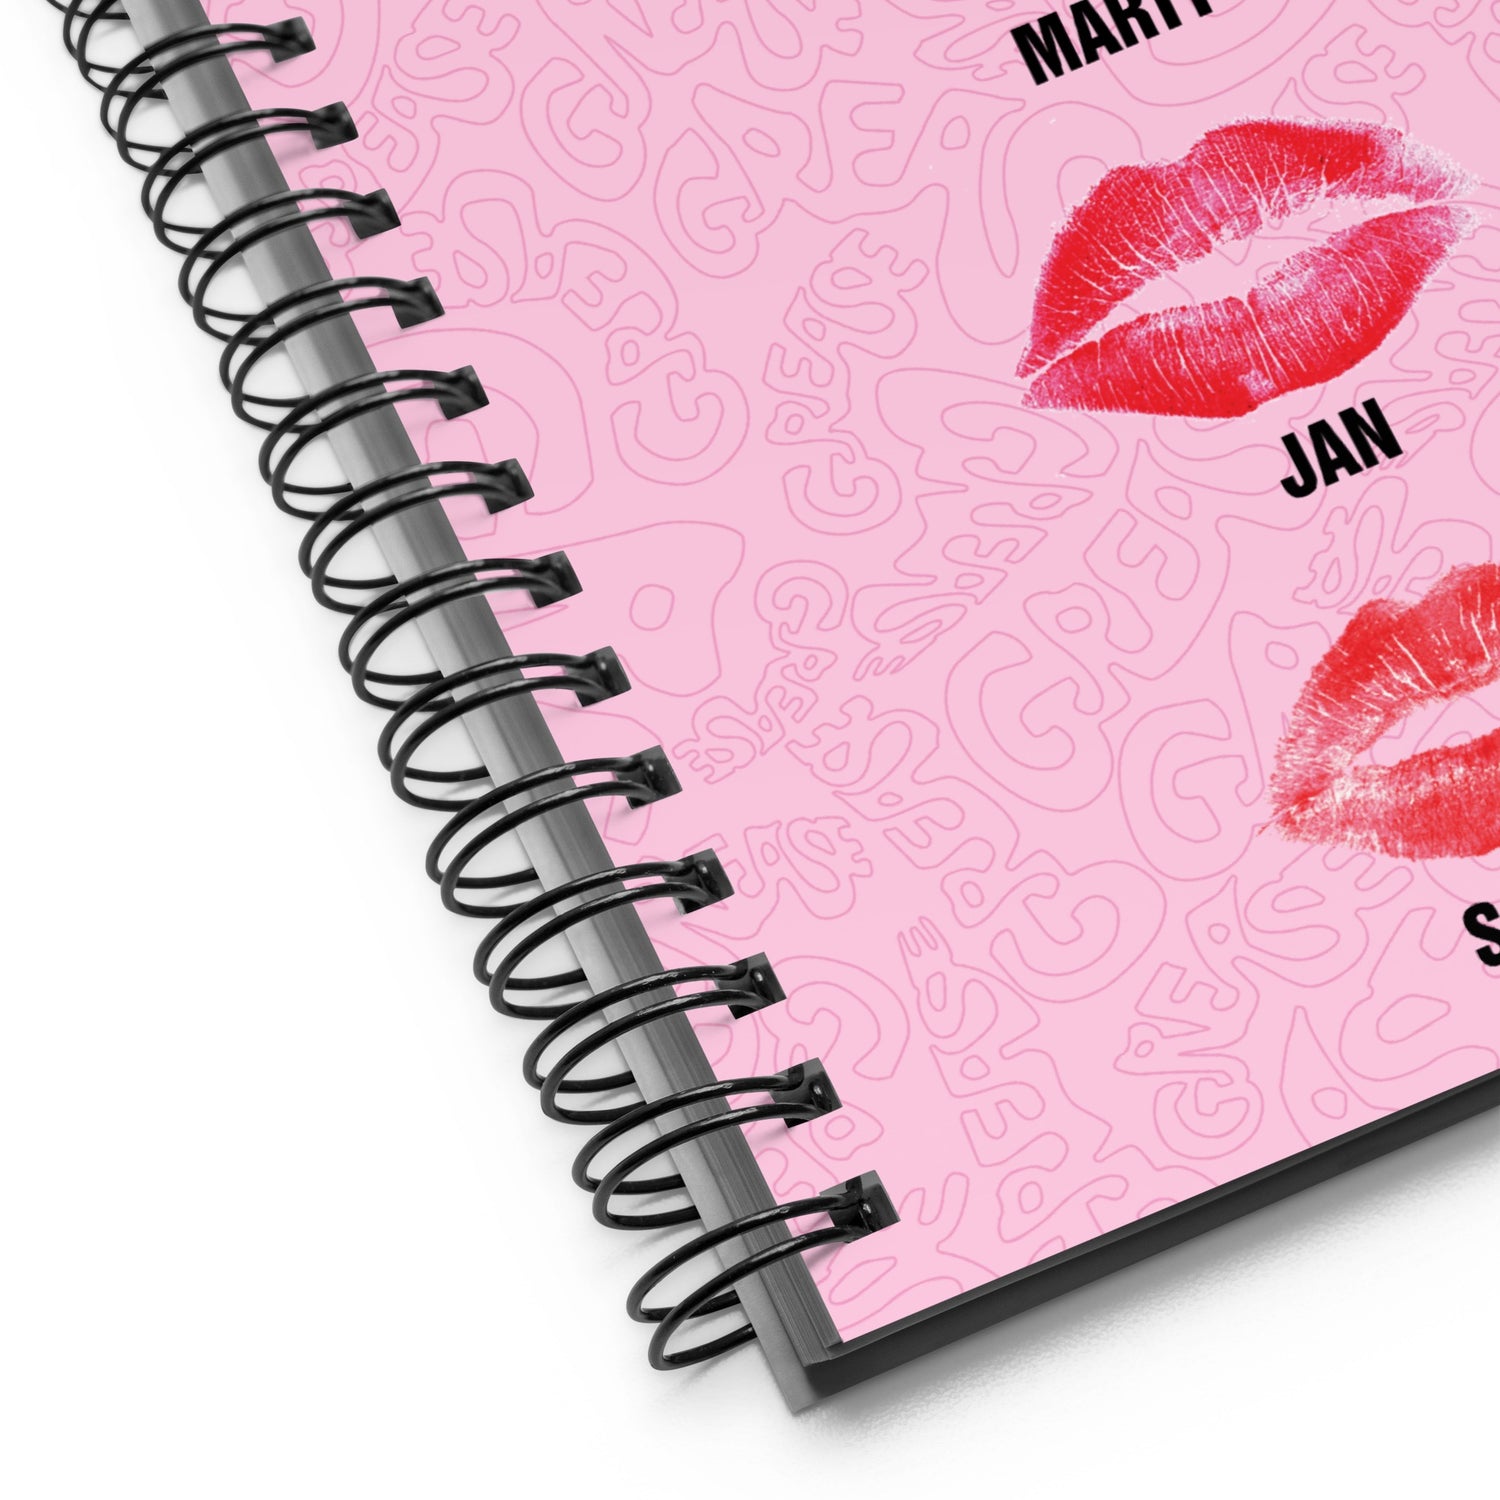 Grease Pink Ladies Kisses Spiral Notebook